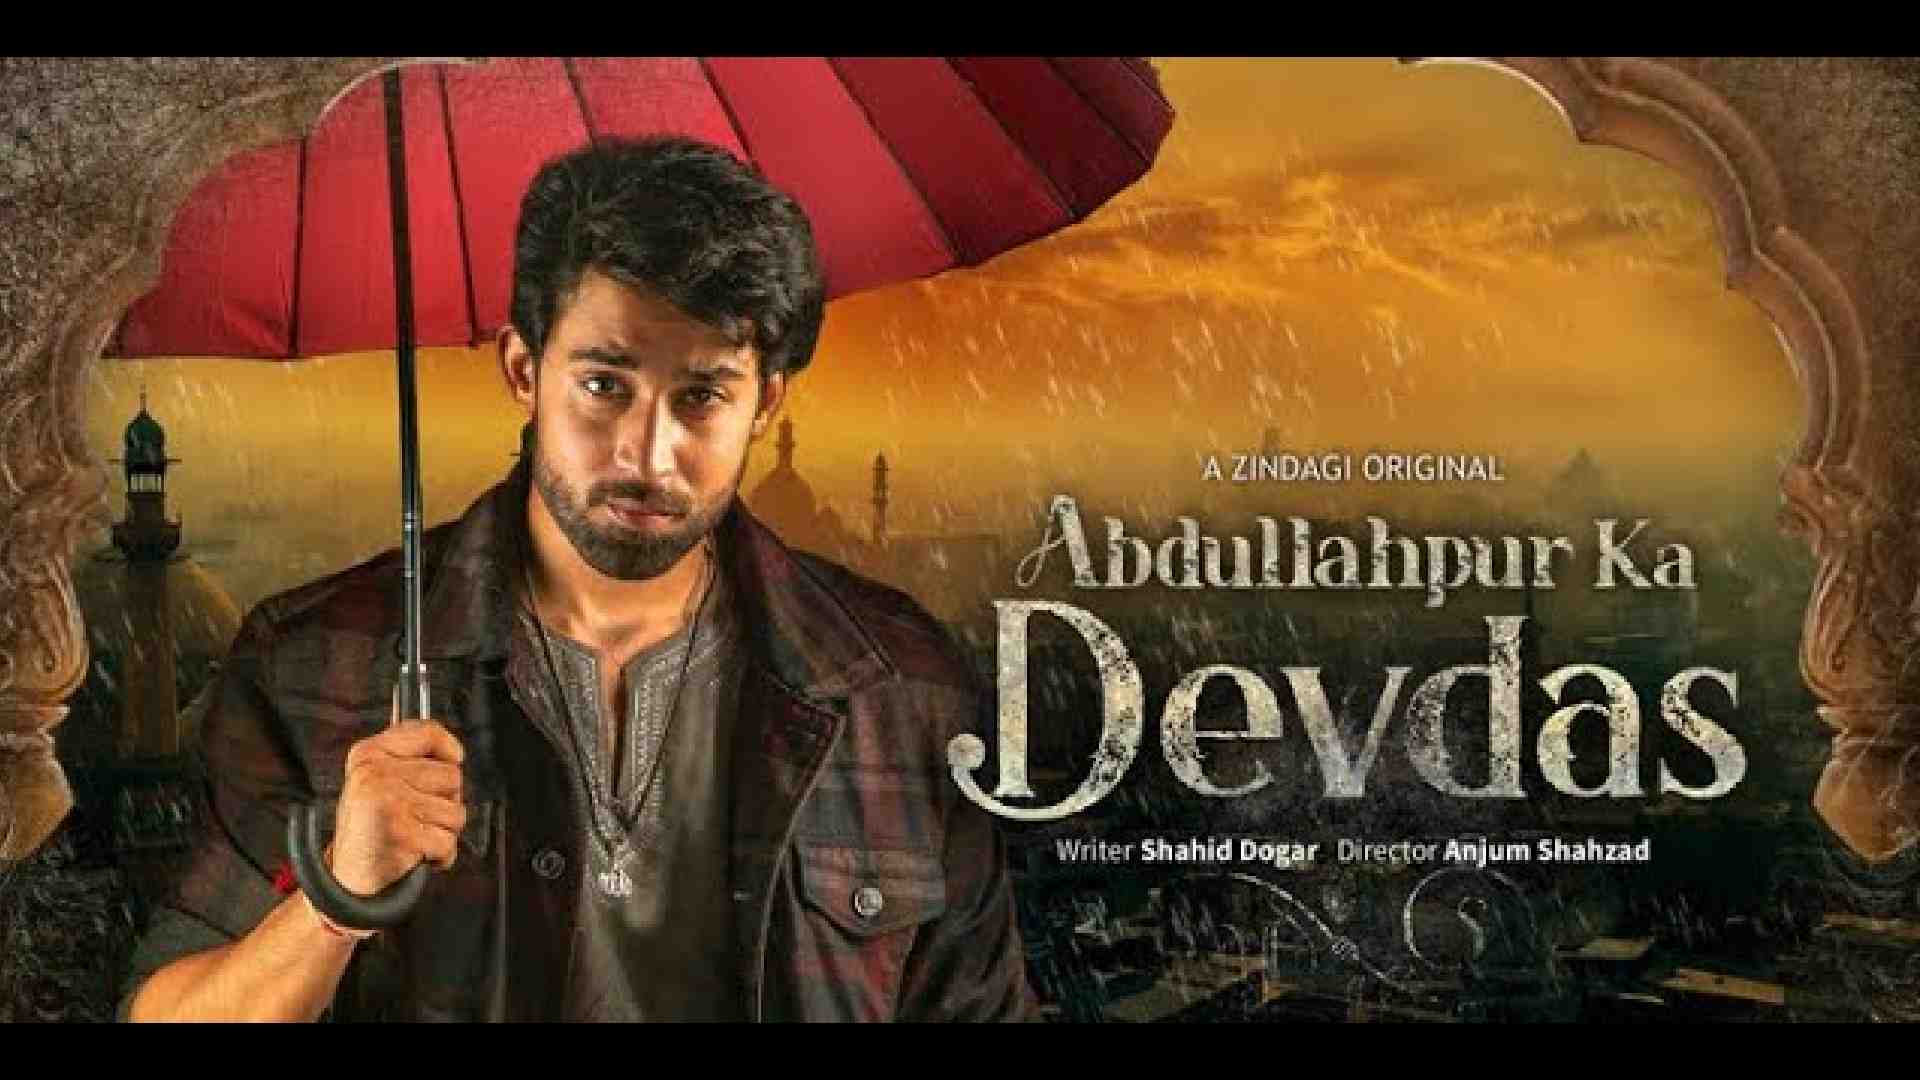 Pakistani Drama AbdullahPur Ka Devdas Synopsis 